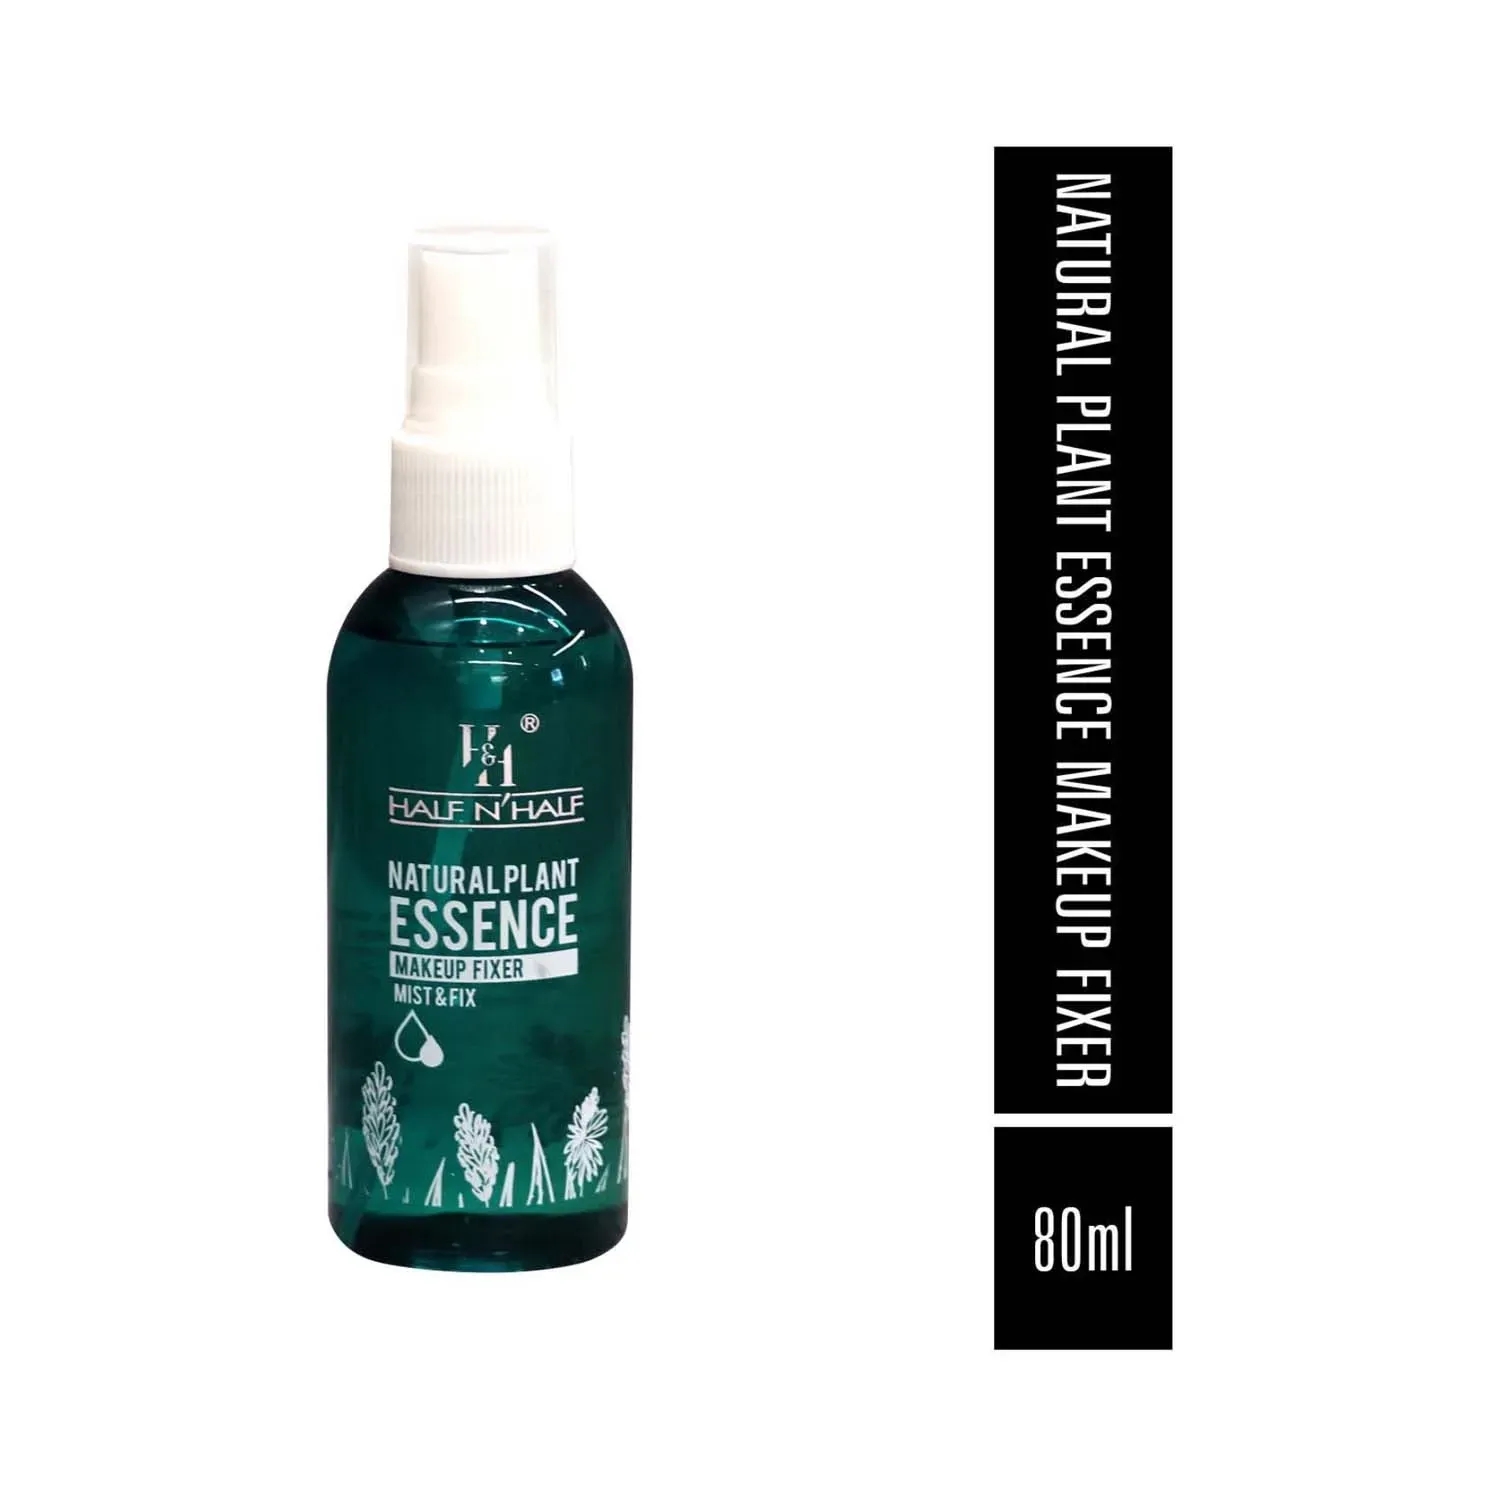 Half N Half | Half N Half Neutral Plant Essence Makeup Fixer Mist Setting Spray - Transparent (80ml)